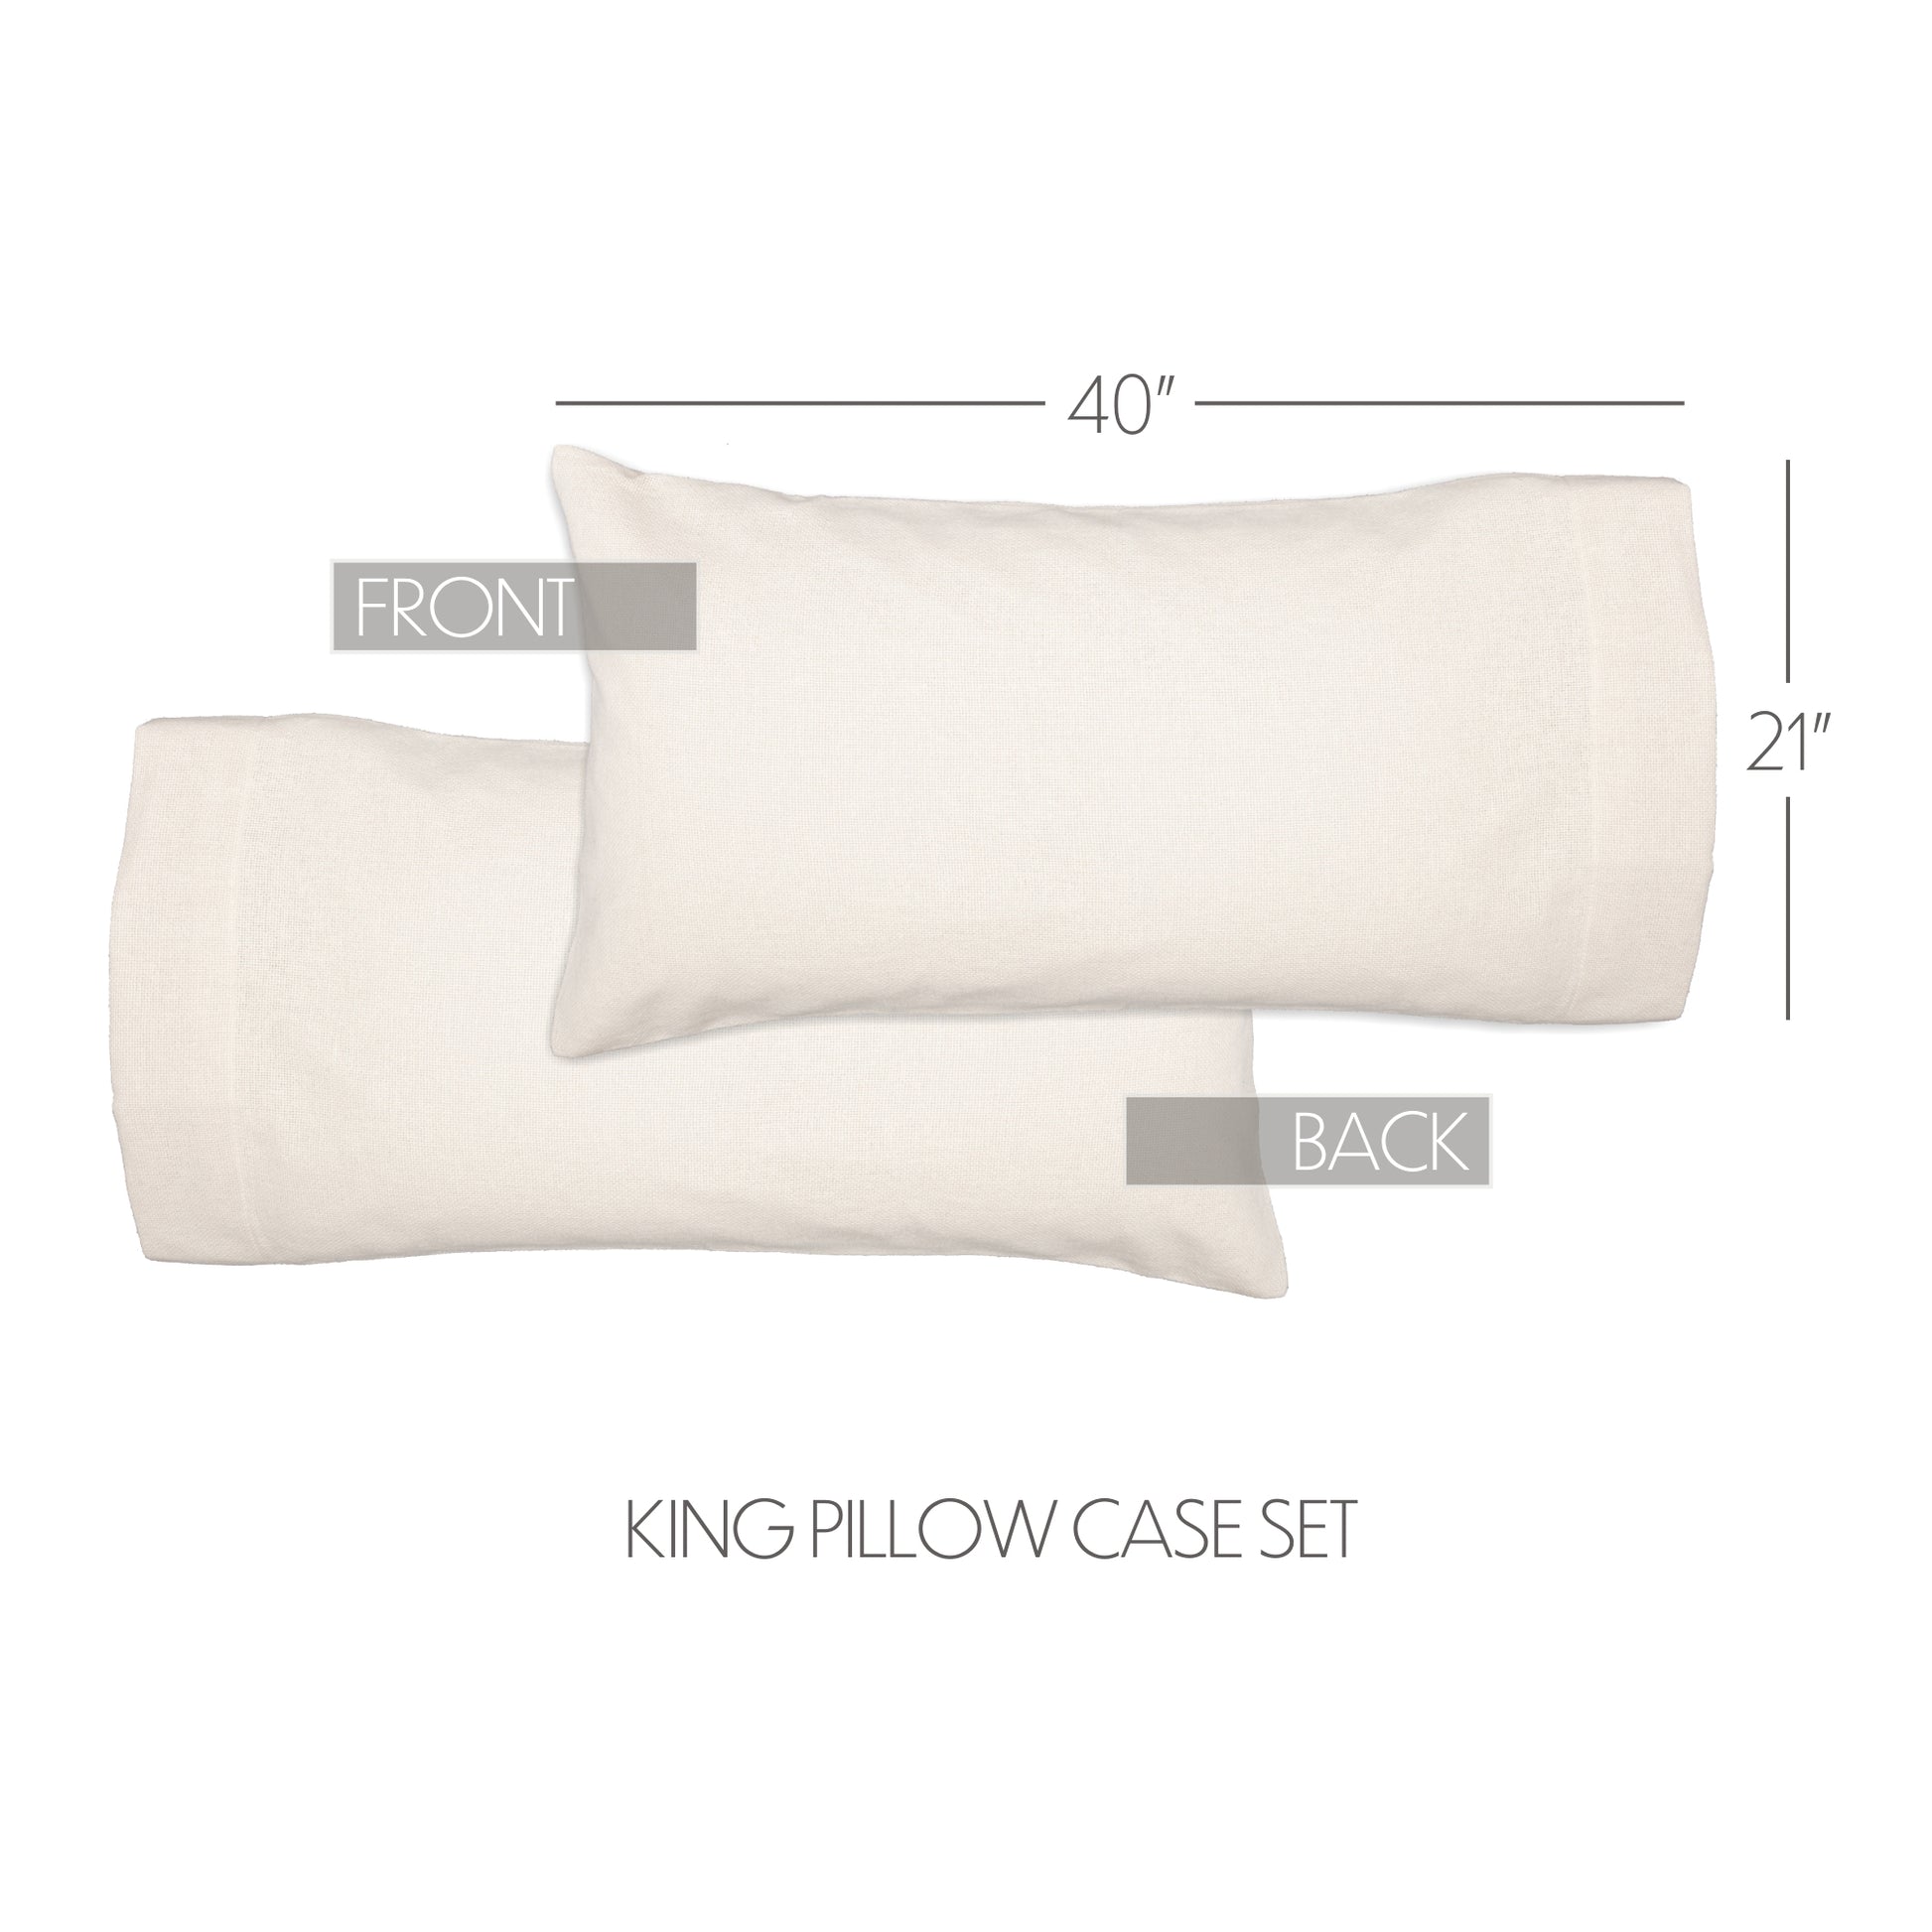 51811-Burlap-Antique-White-King-Pillow-Case-Set-of-2-21x40-image-1